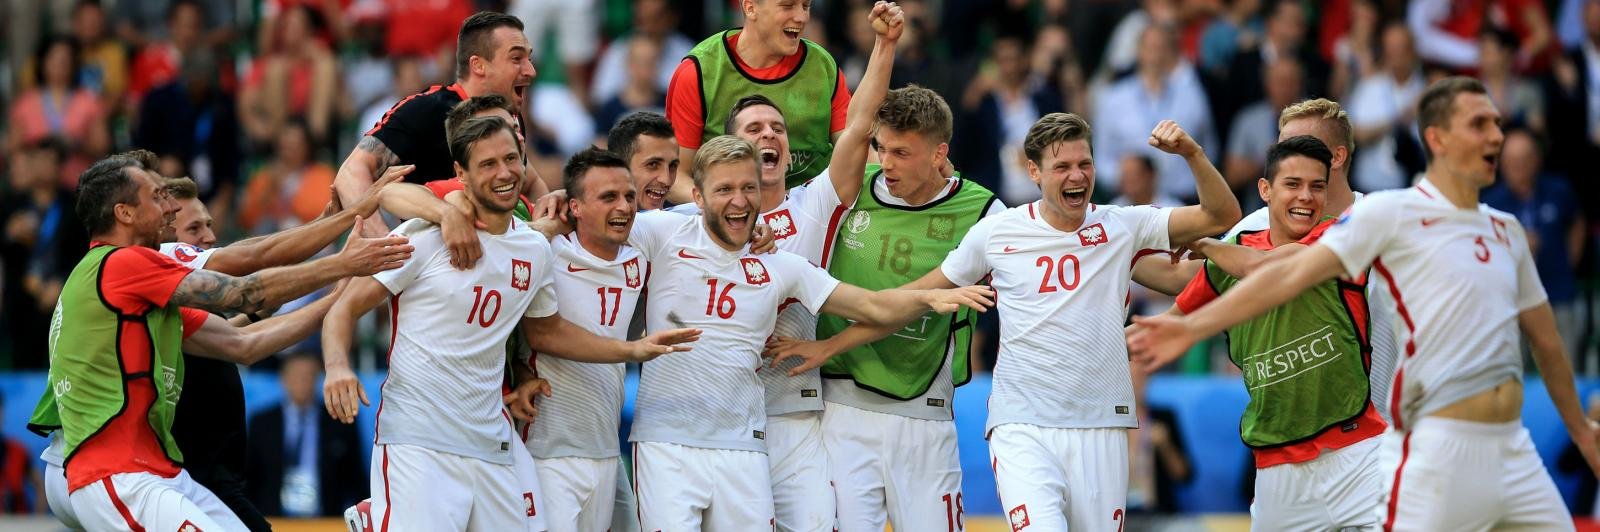 Poland vs Portugal: EURO 2016 Quarter-final Preview & Prediction